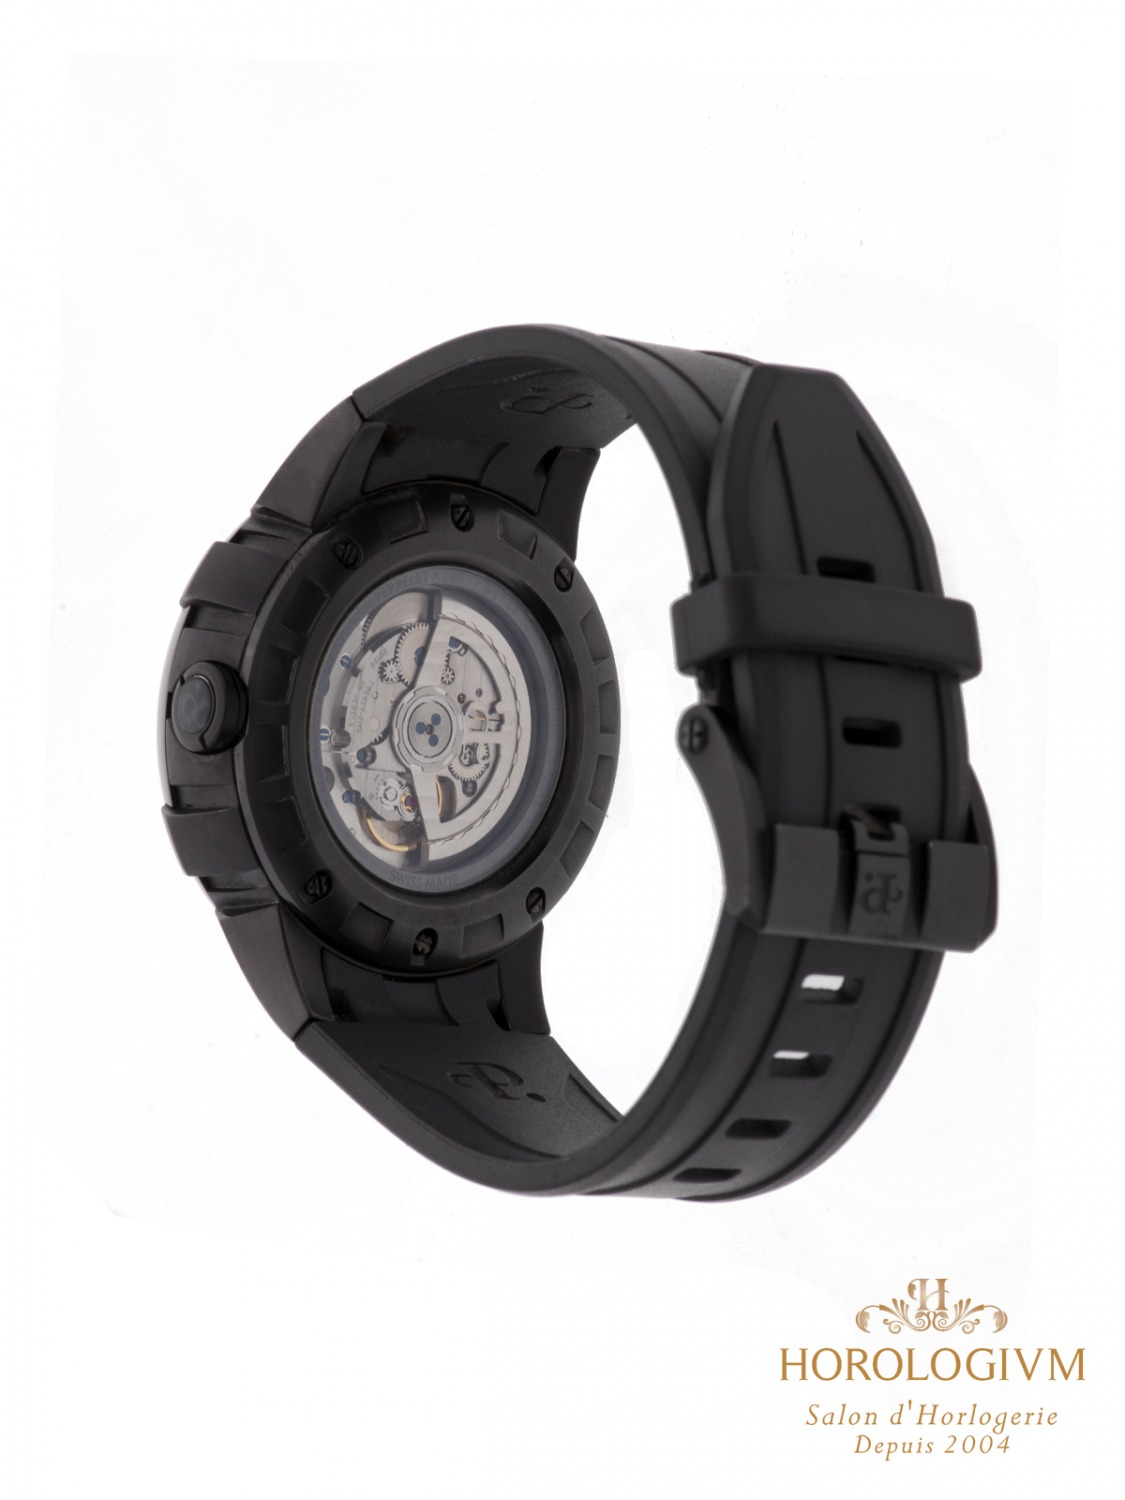 Perrelet Turbine XL Ref. A1051/B0141 watch, black PVD (Physical Vapor Deposition)